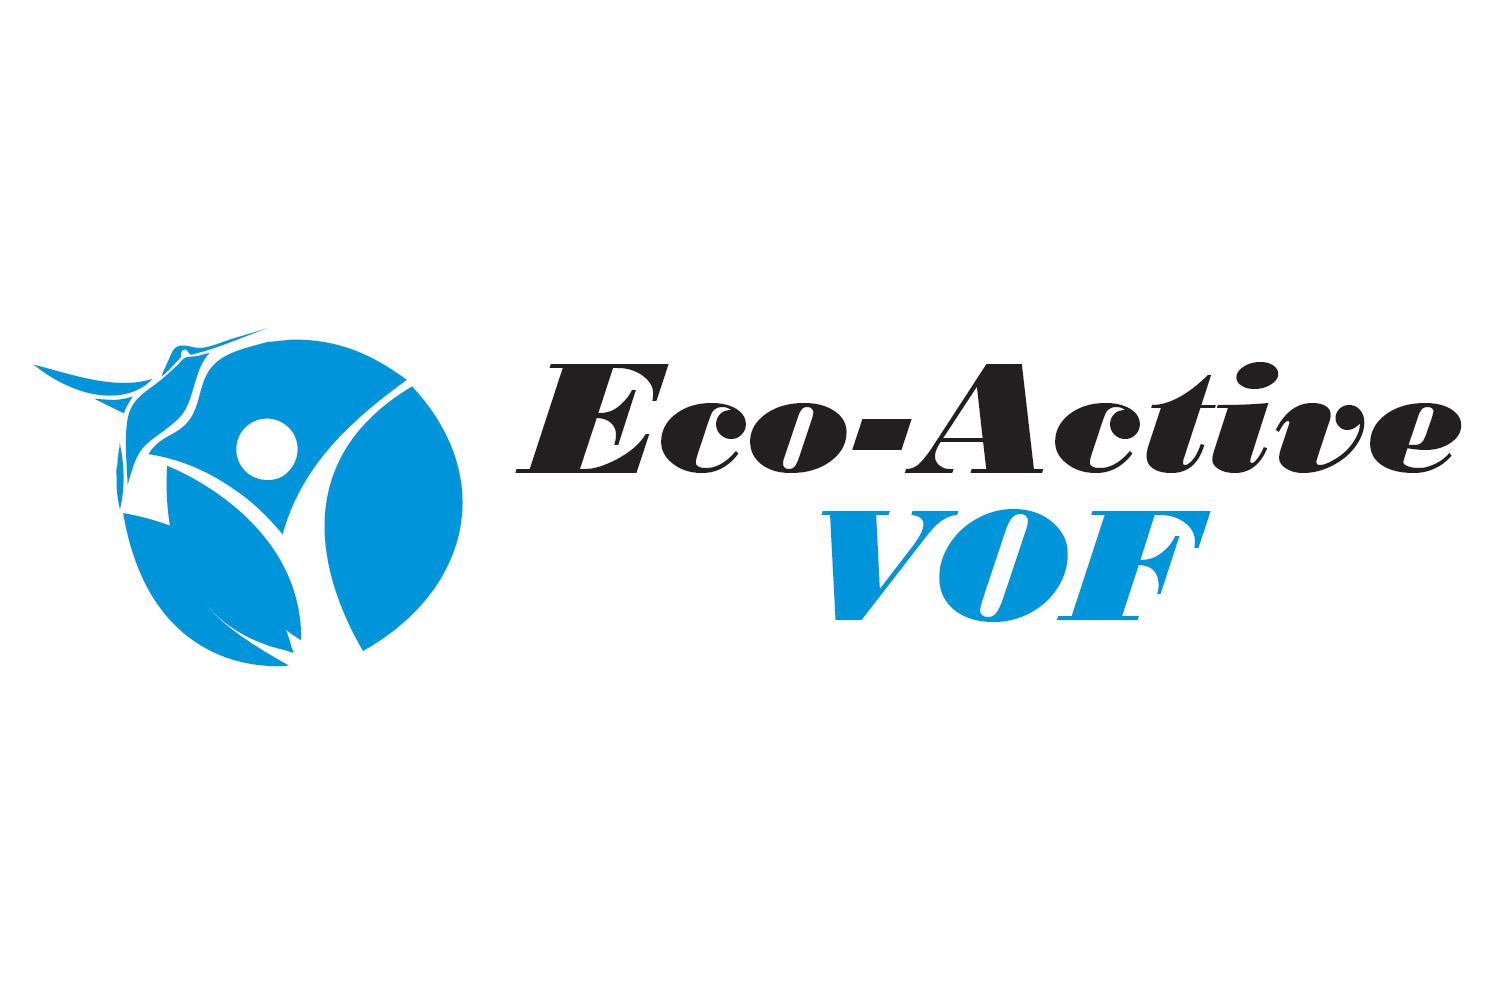 Product: Eco Active VOF - Prime Pharma